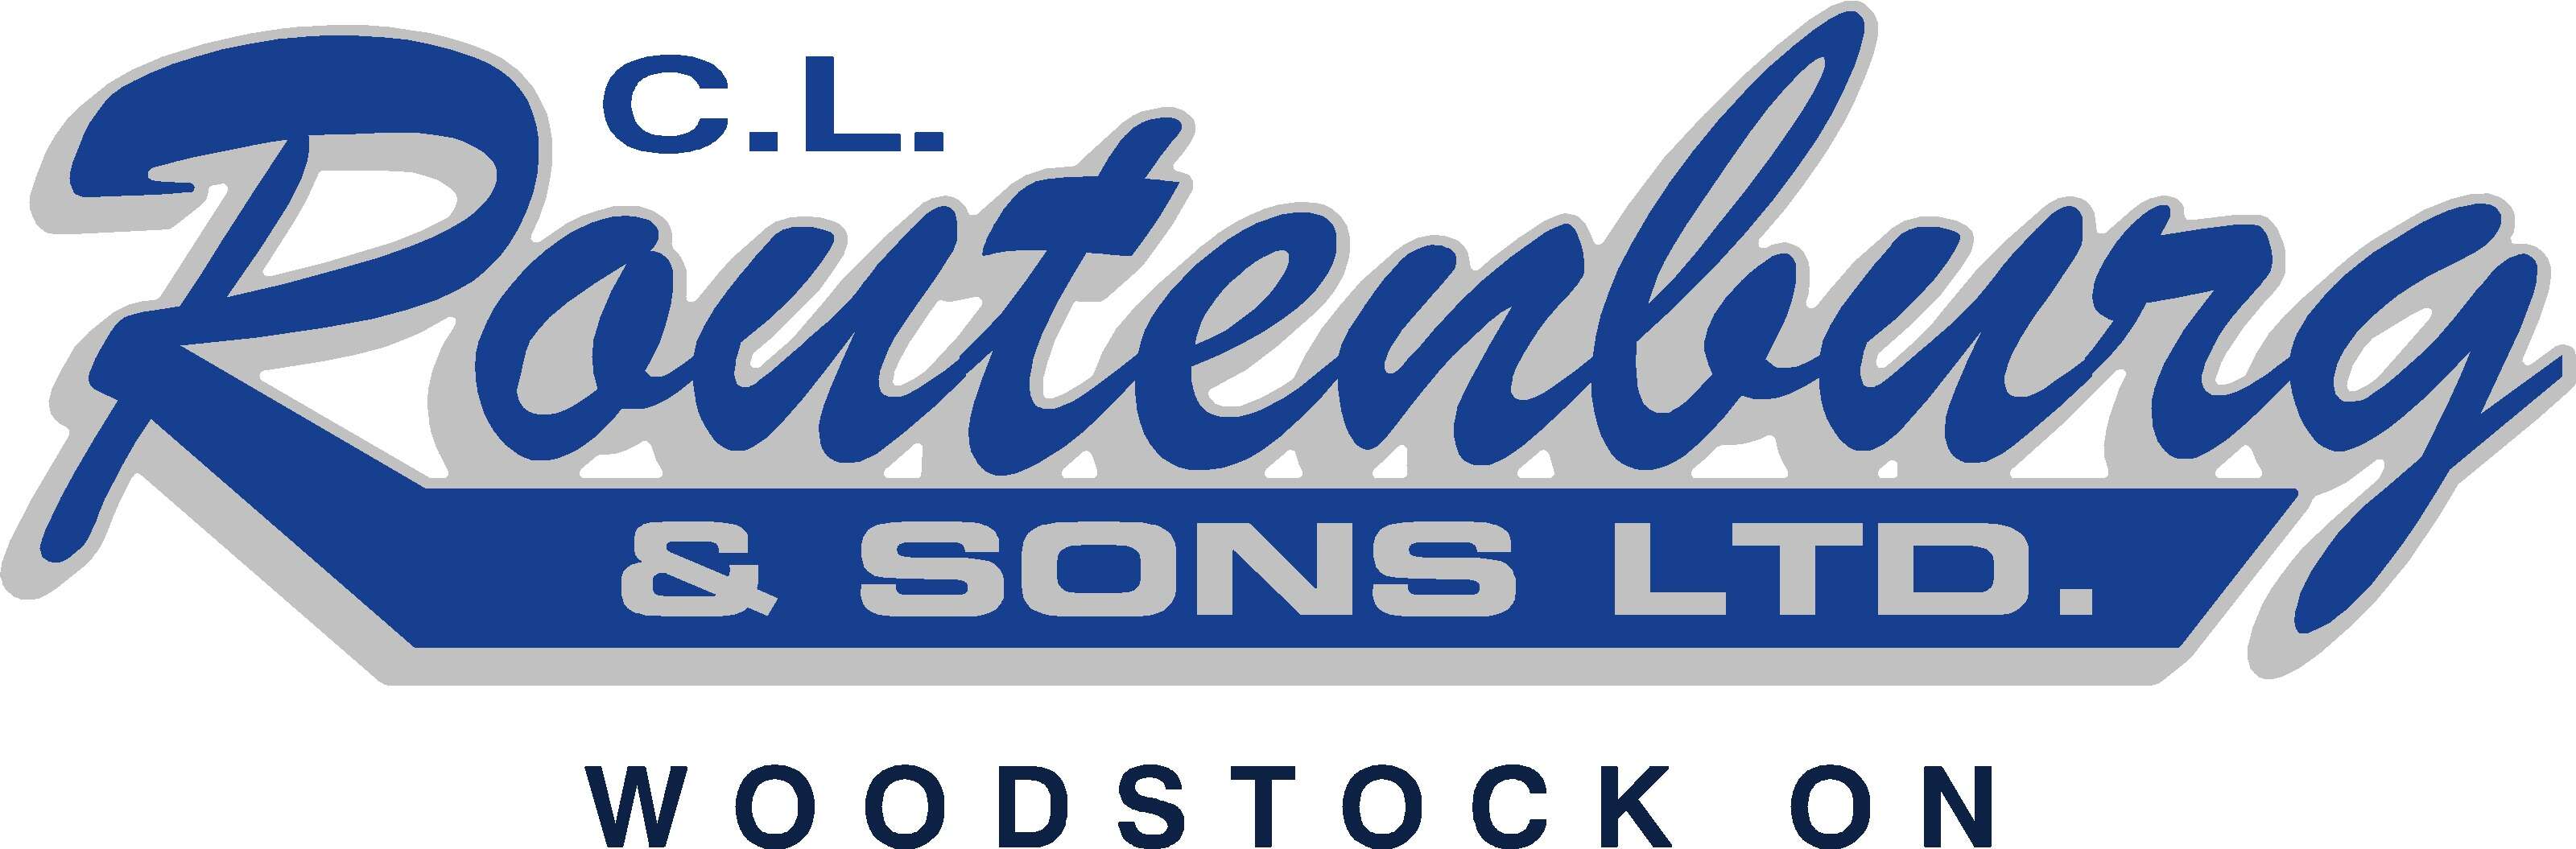 C.L Routenburg & Sons Ltd.